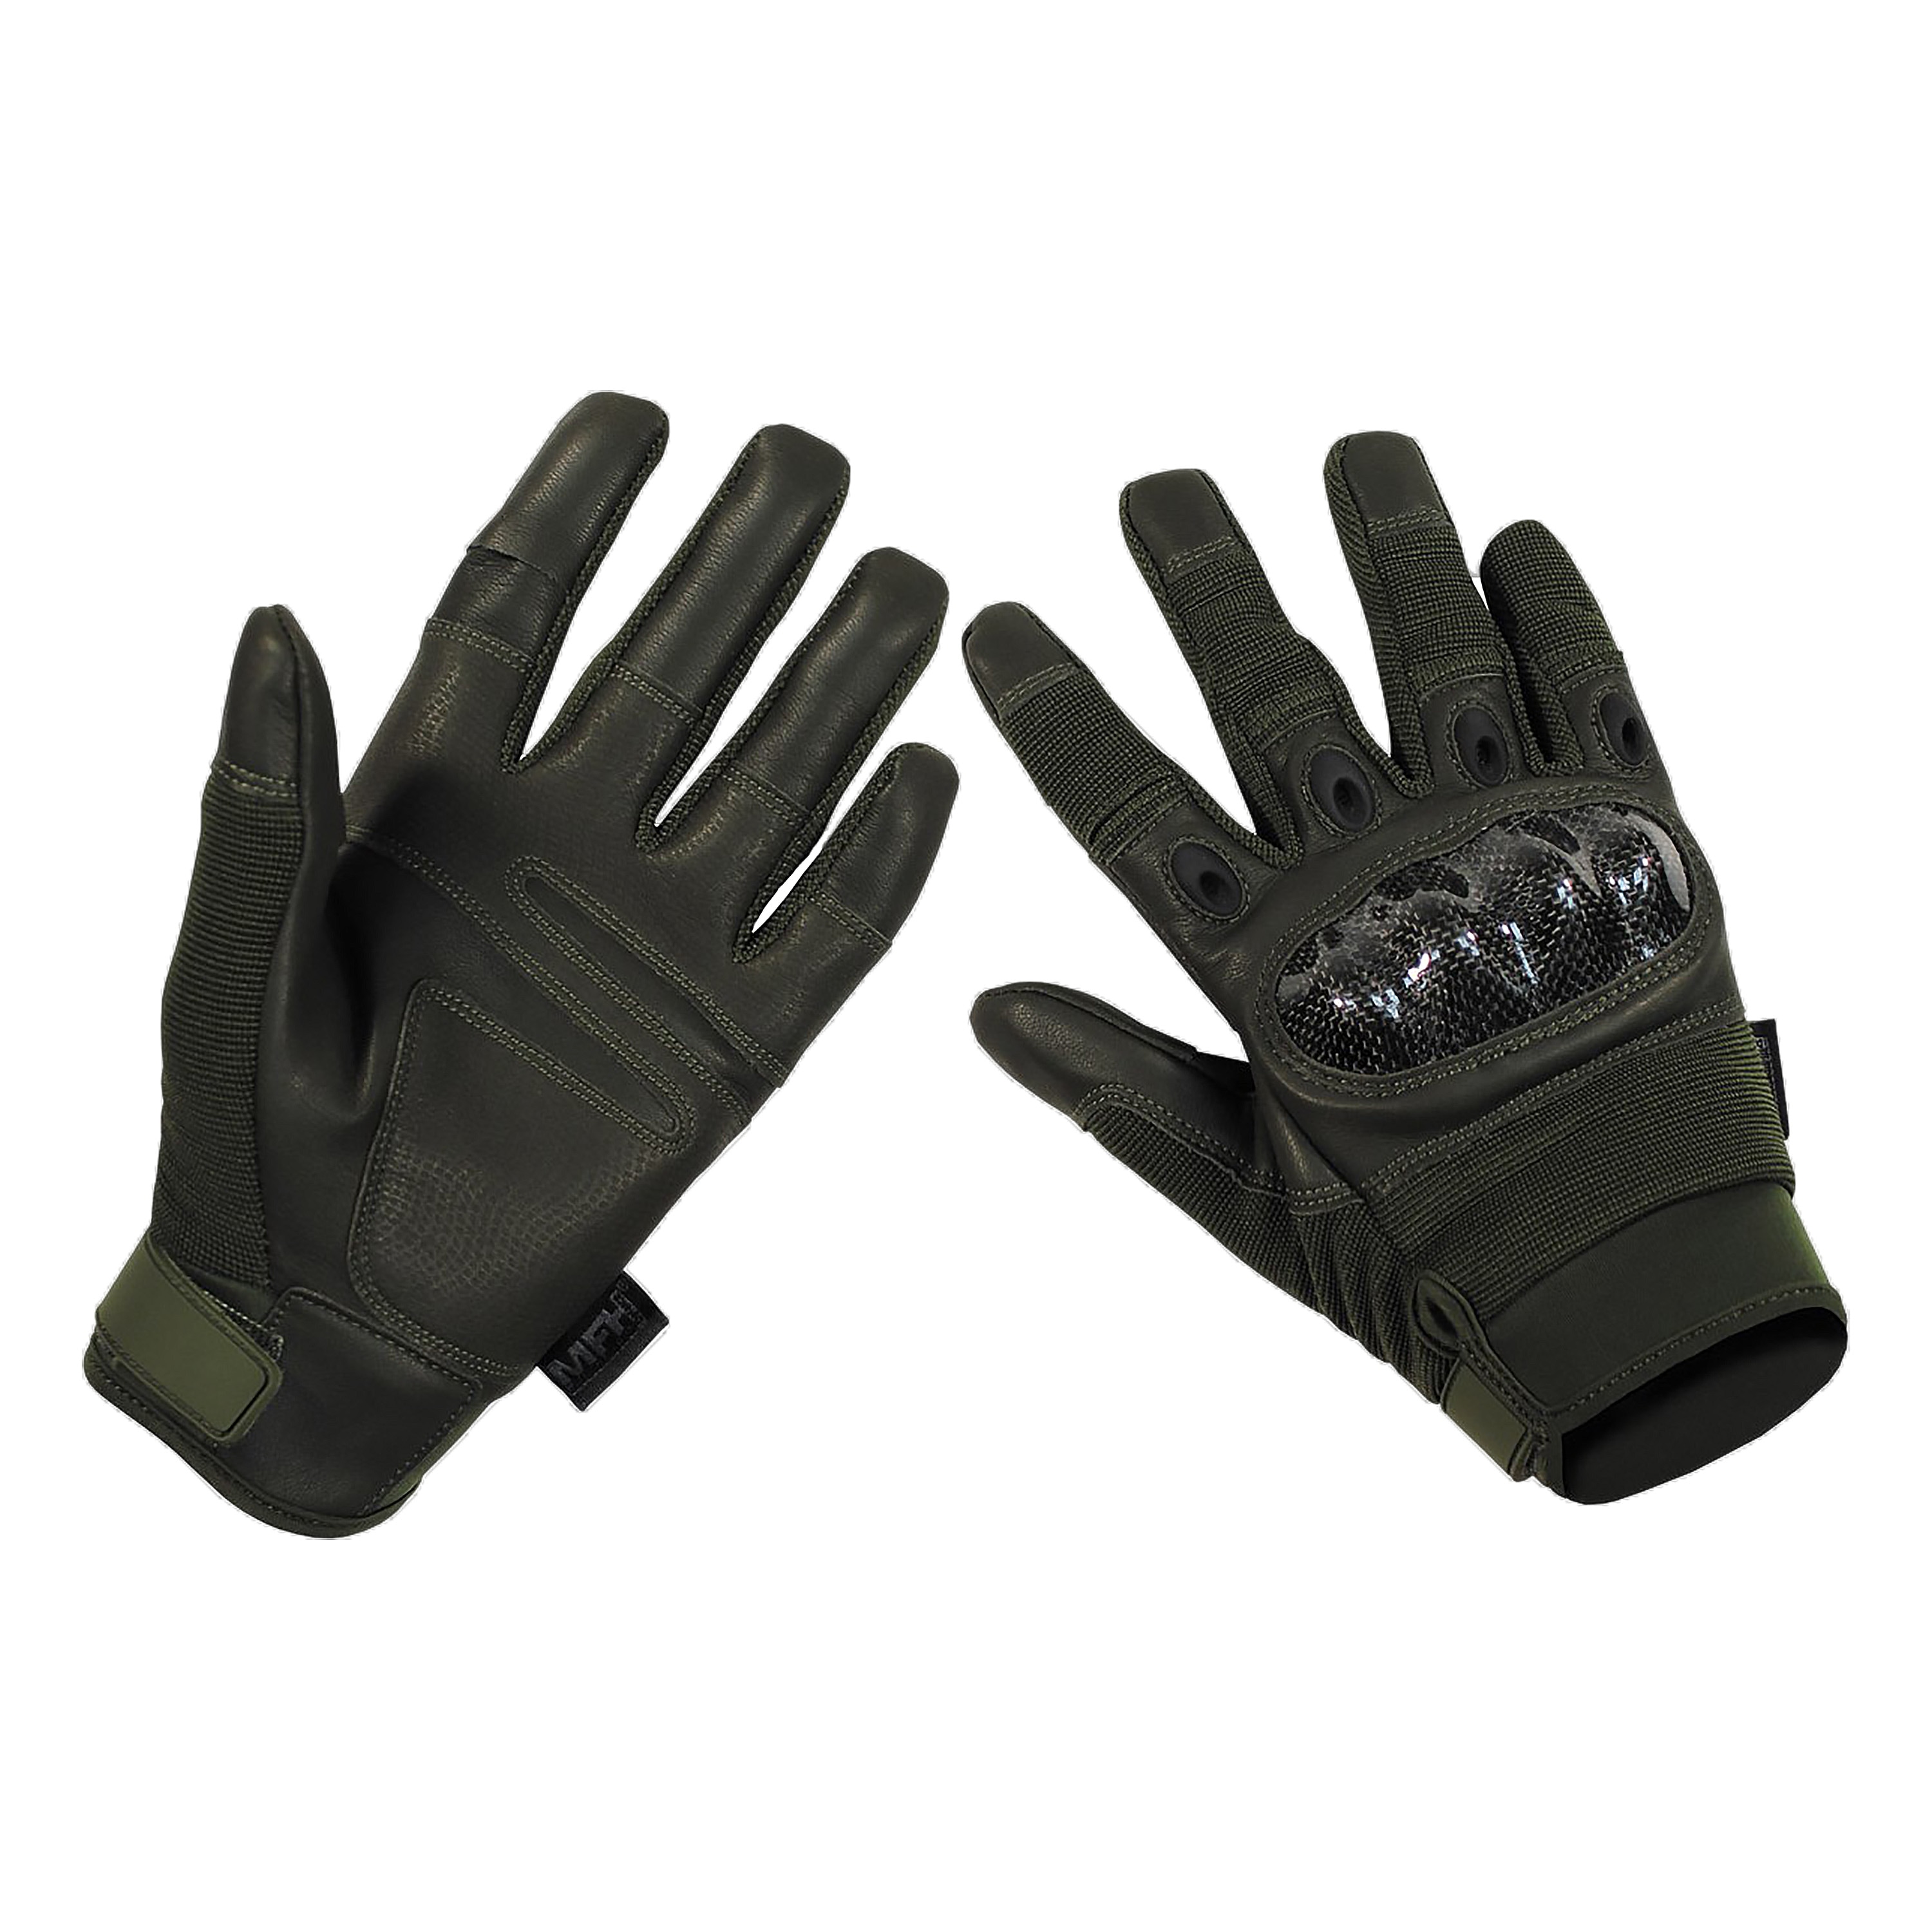 Handschuhe Army SWAT            -NEU Security Army Gloves oliv 